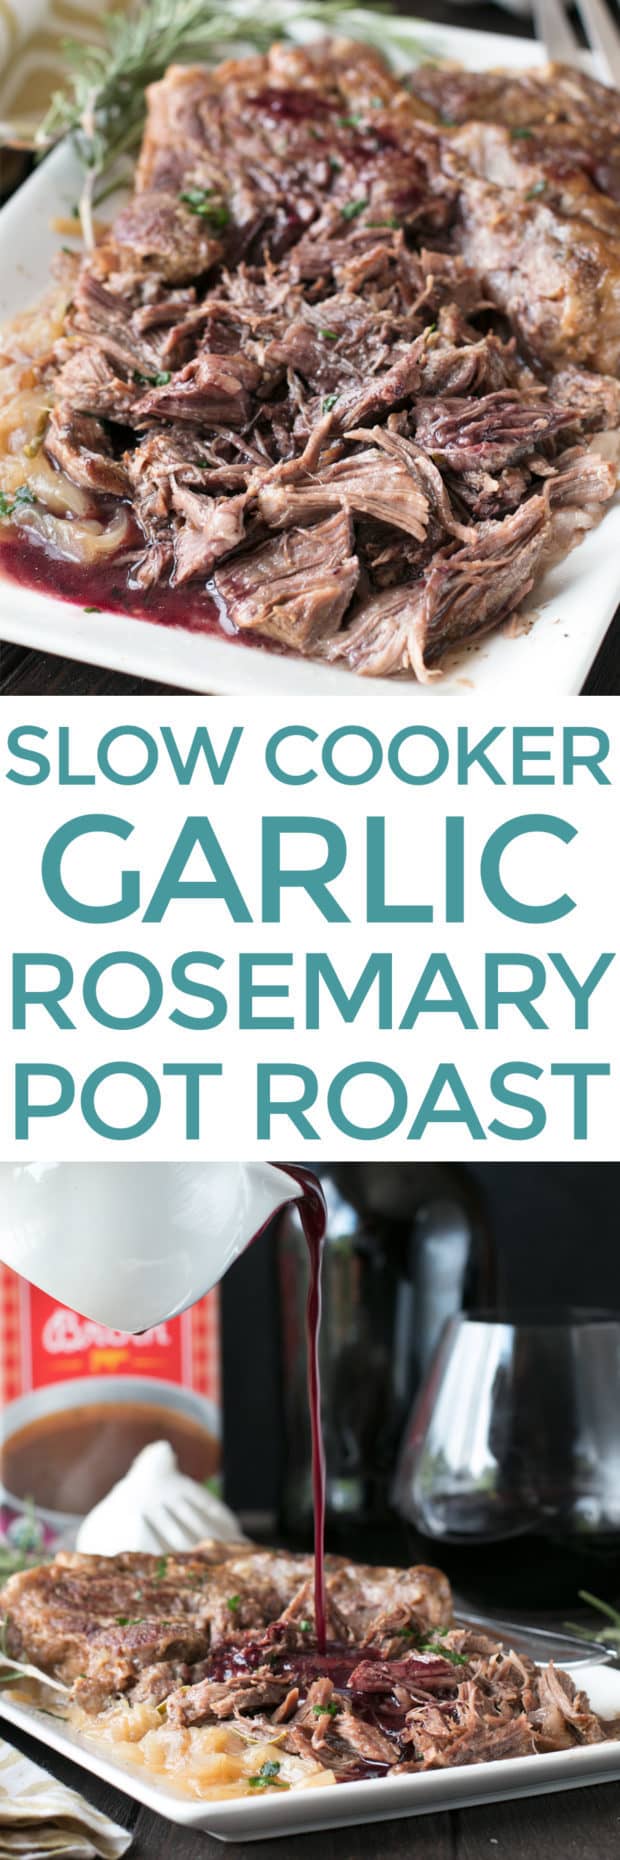 Slow Cooker Garlic Rosemary Pot Roast with Red Wine Sauce | cakenknife.com #ad #roastwiththemost #potroast #crockpot